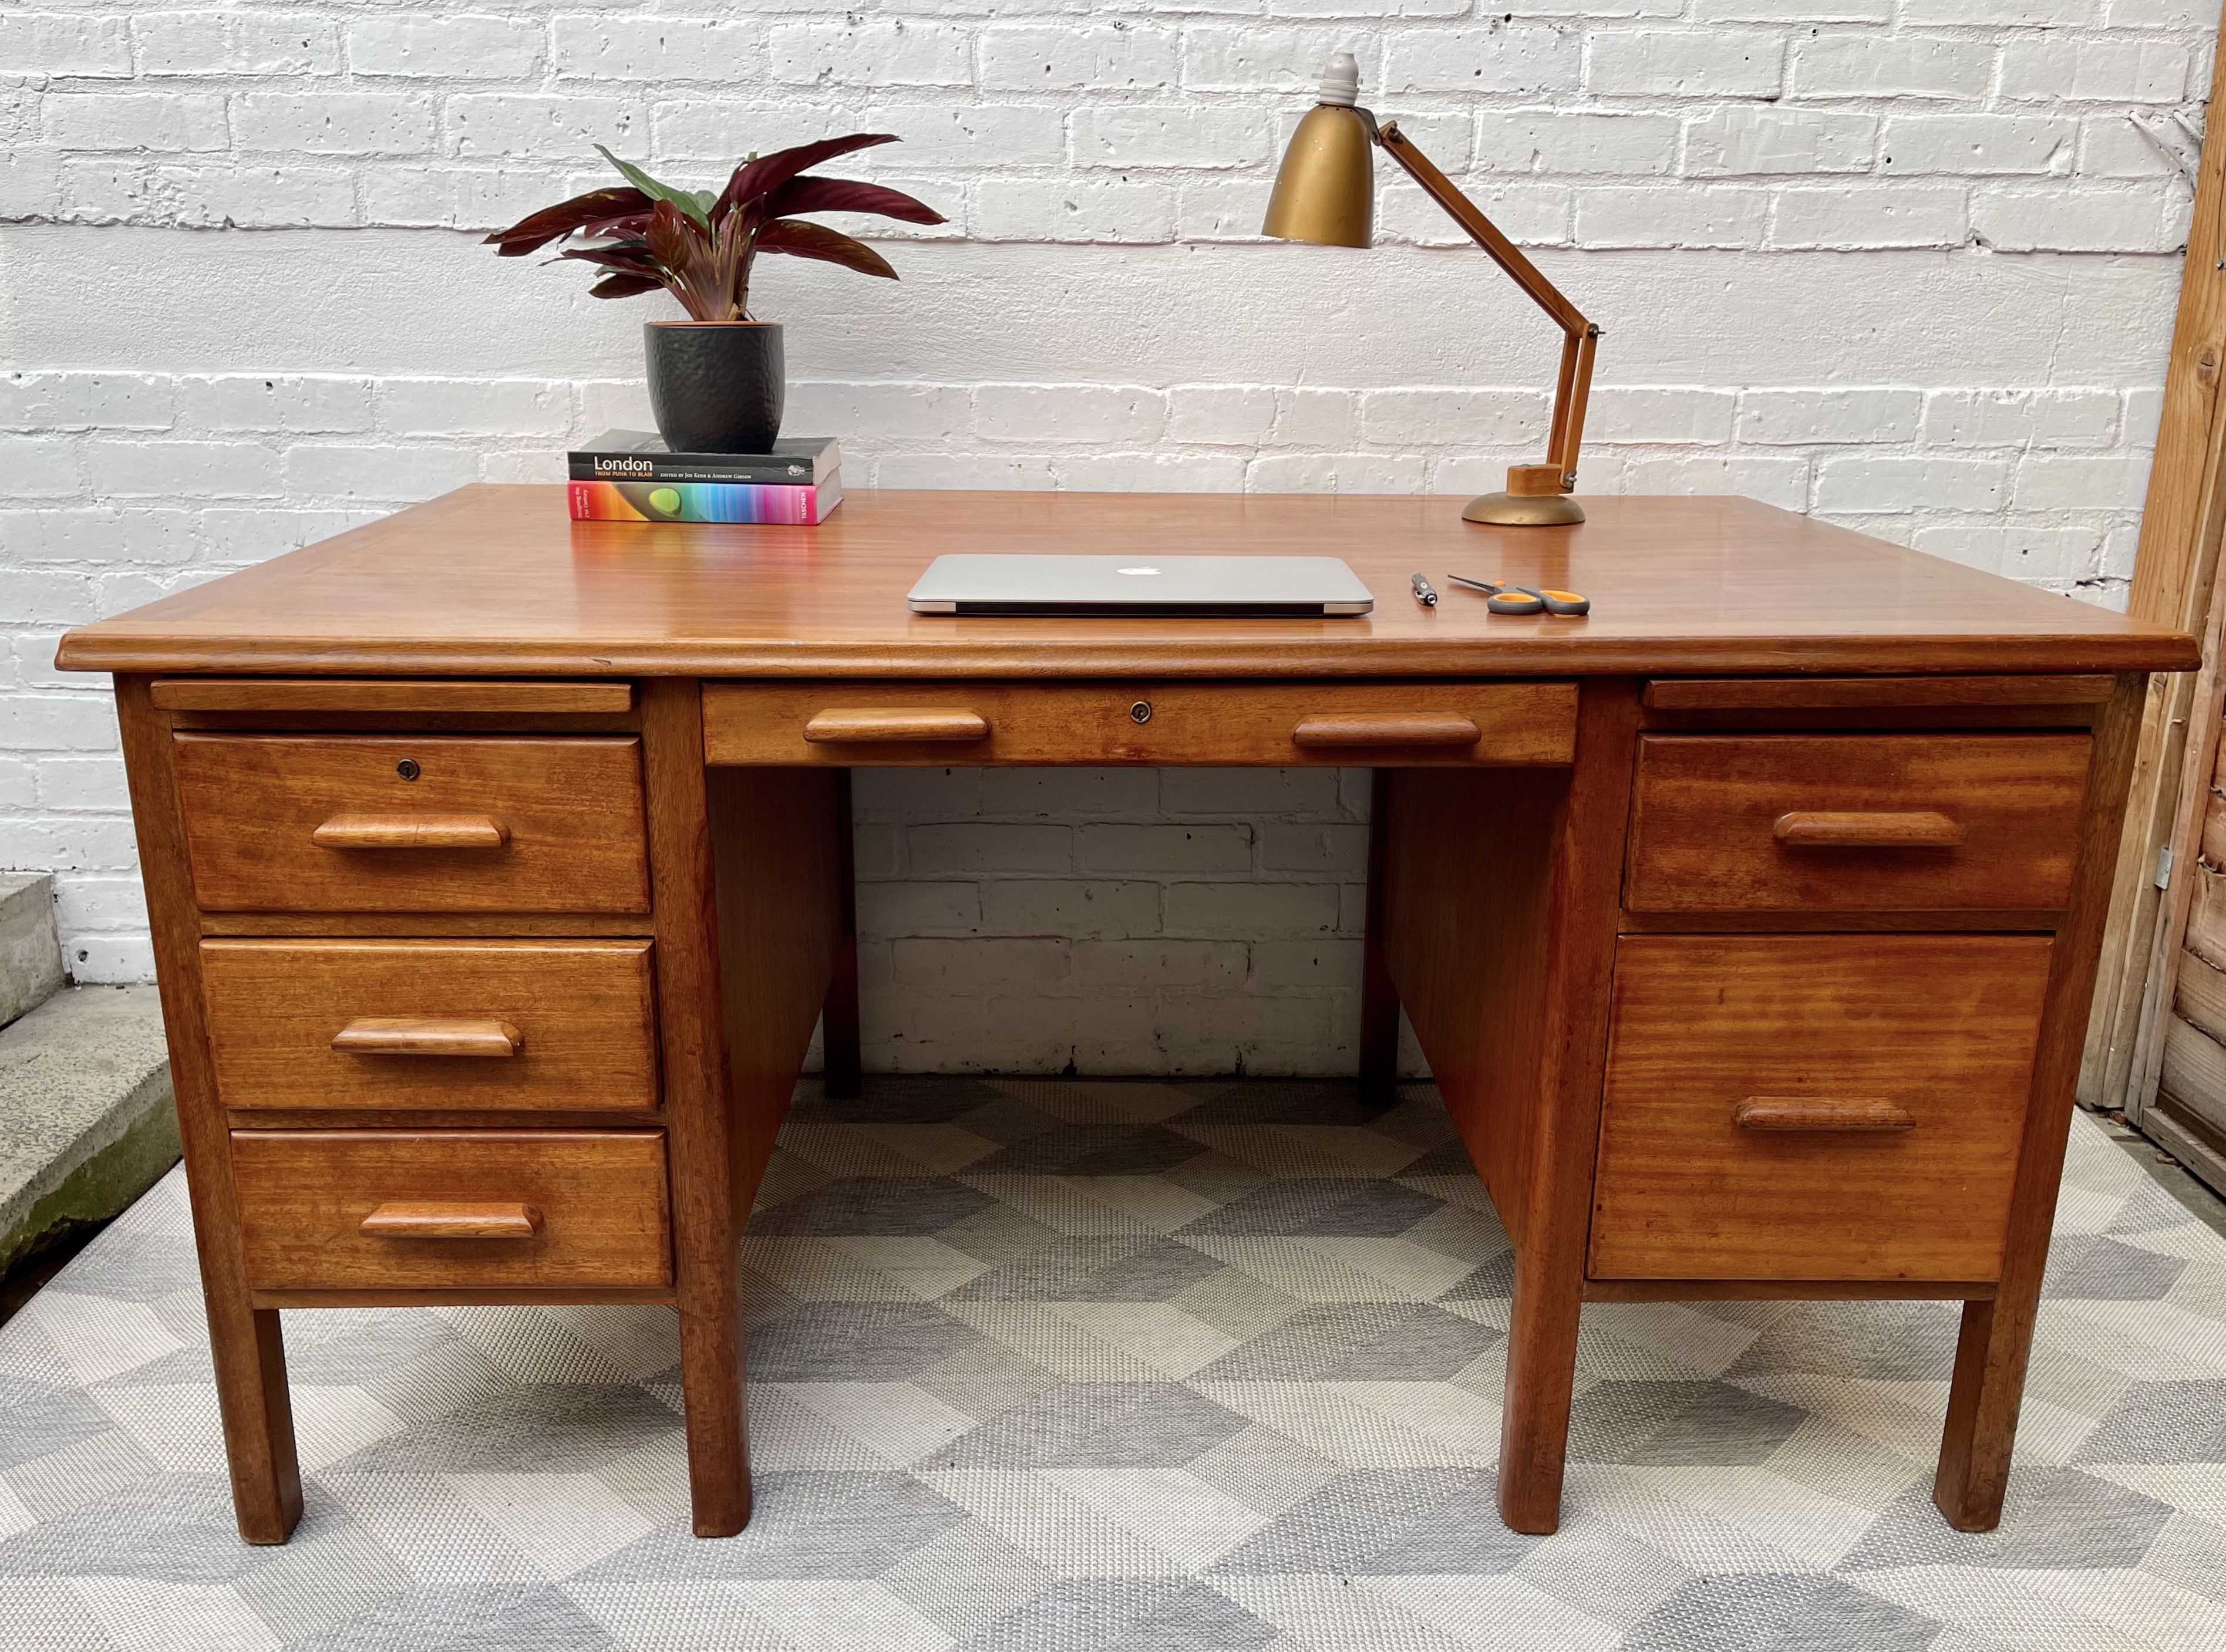 Large Vintage Wooden Desk With Drawers, Large Wooden Desk With Drawers